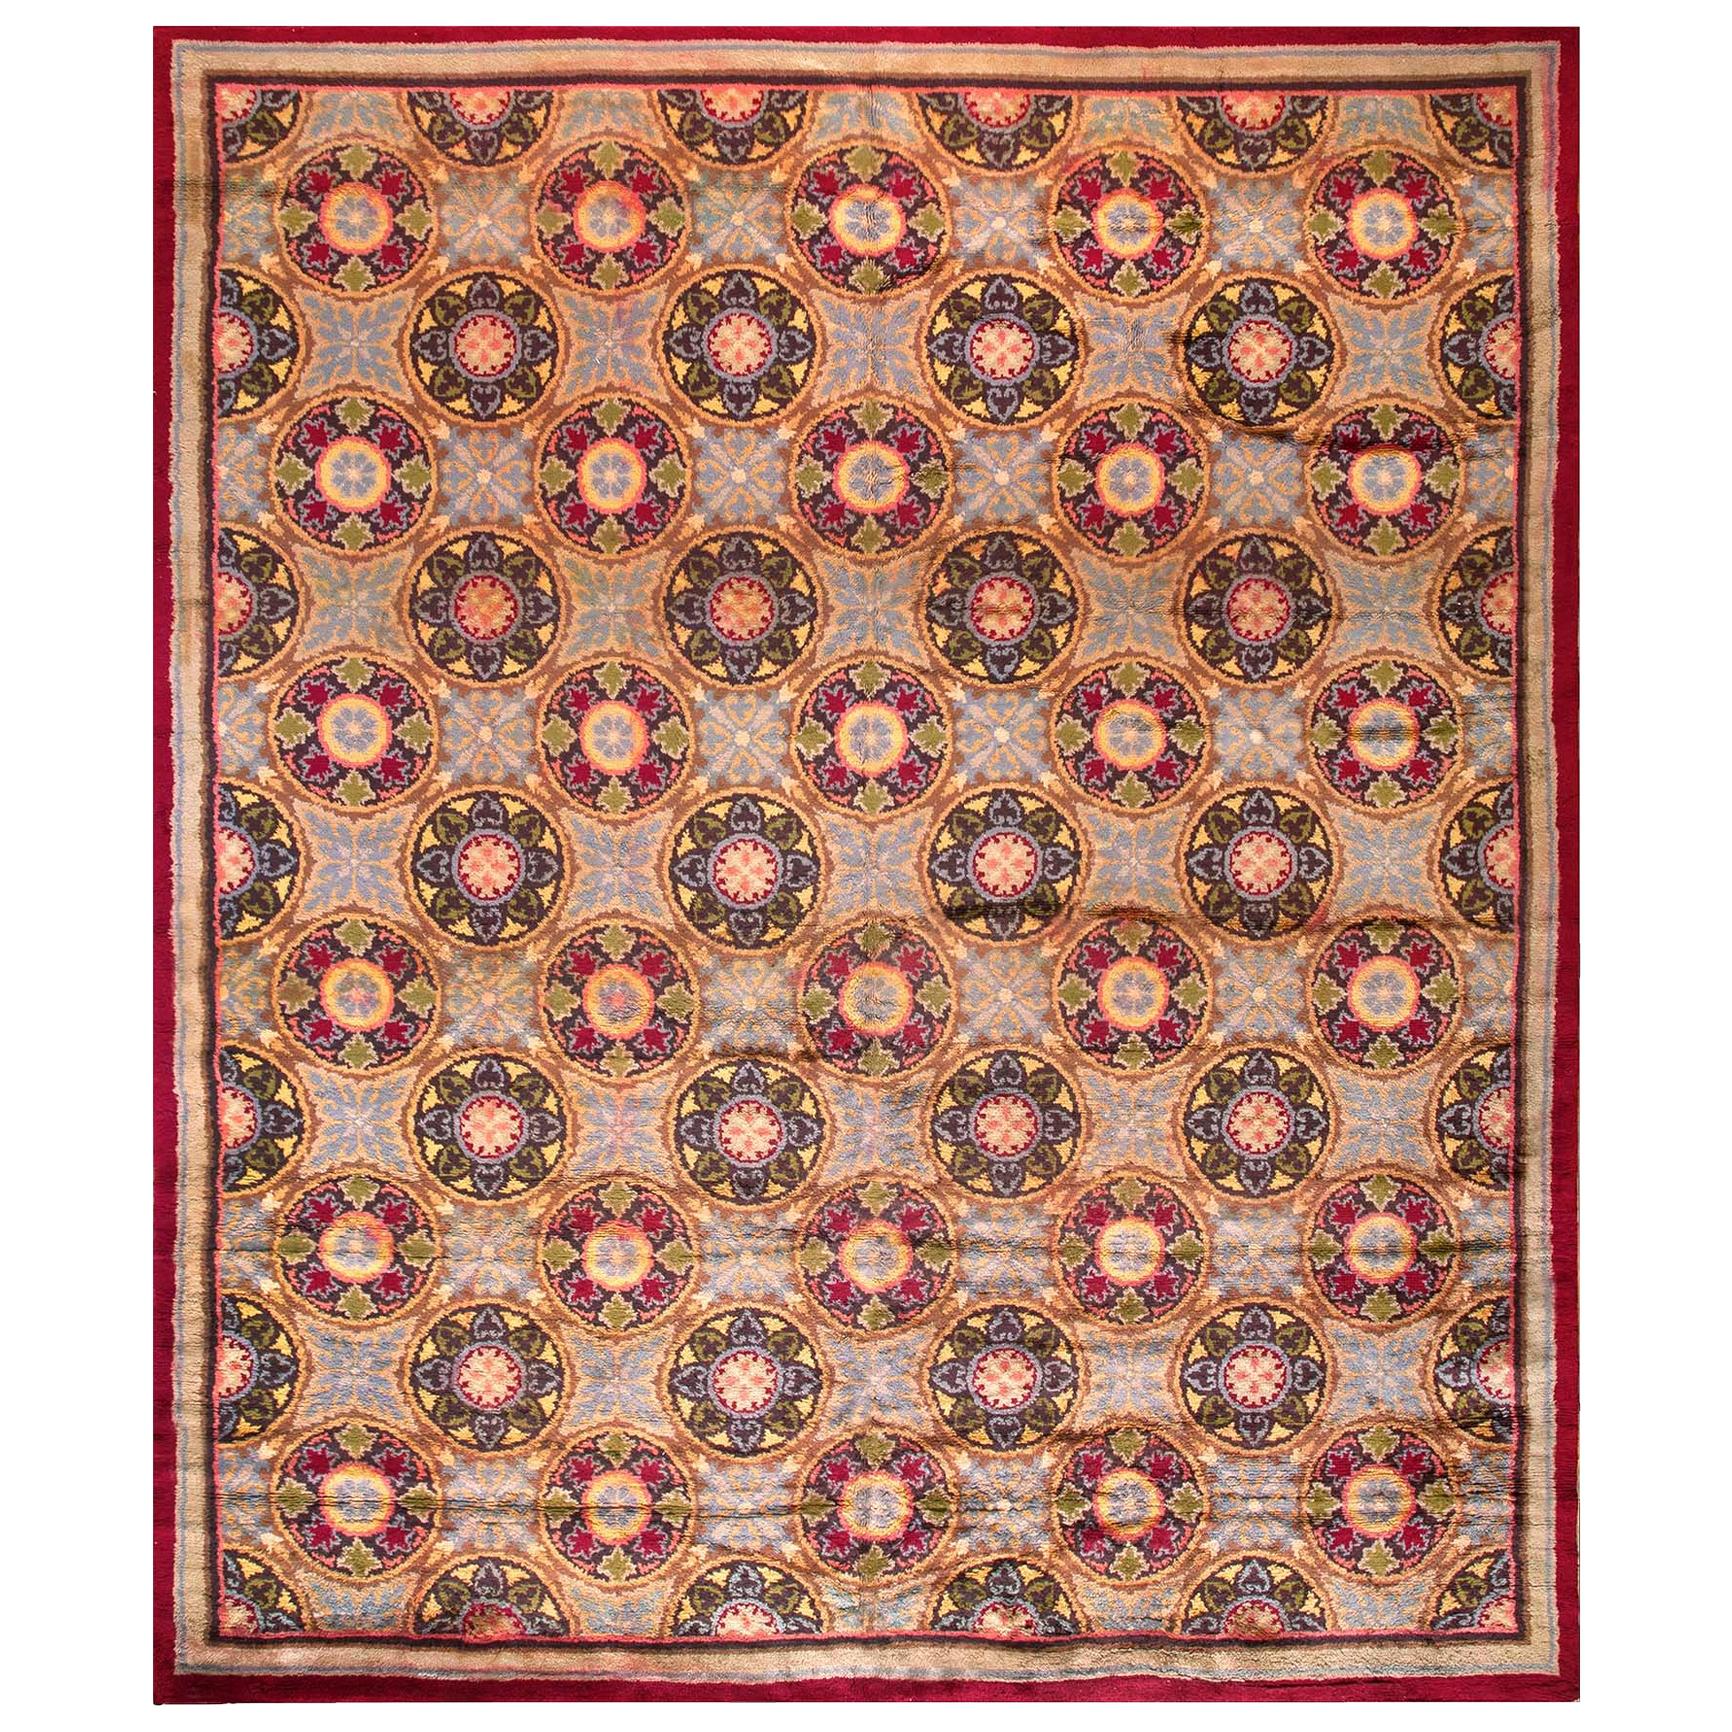 Early 20th Century Spanish Savonnerie Carpet ( 11'2" x 13'8" - 340 x 417 )